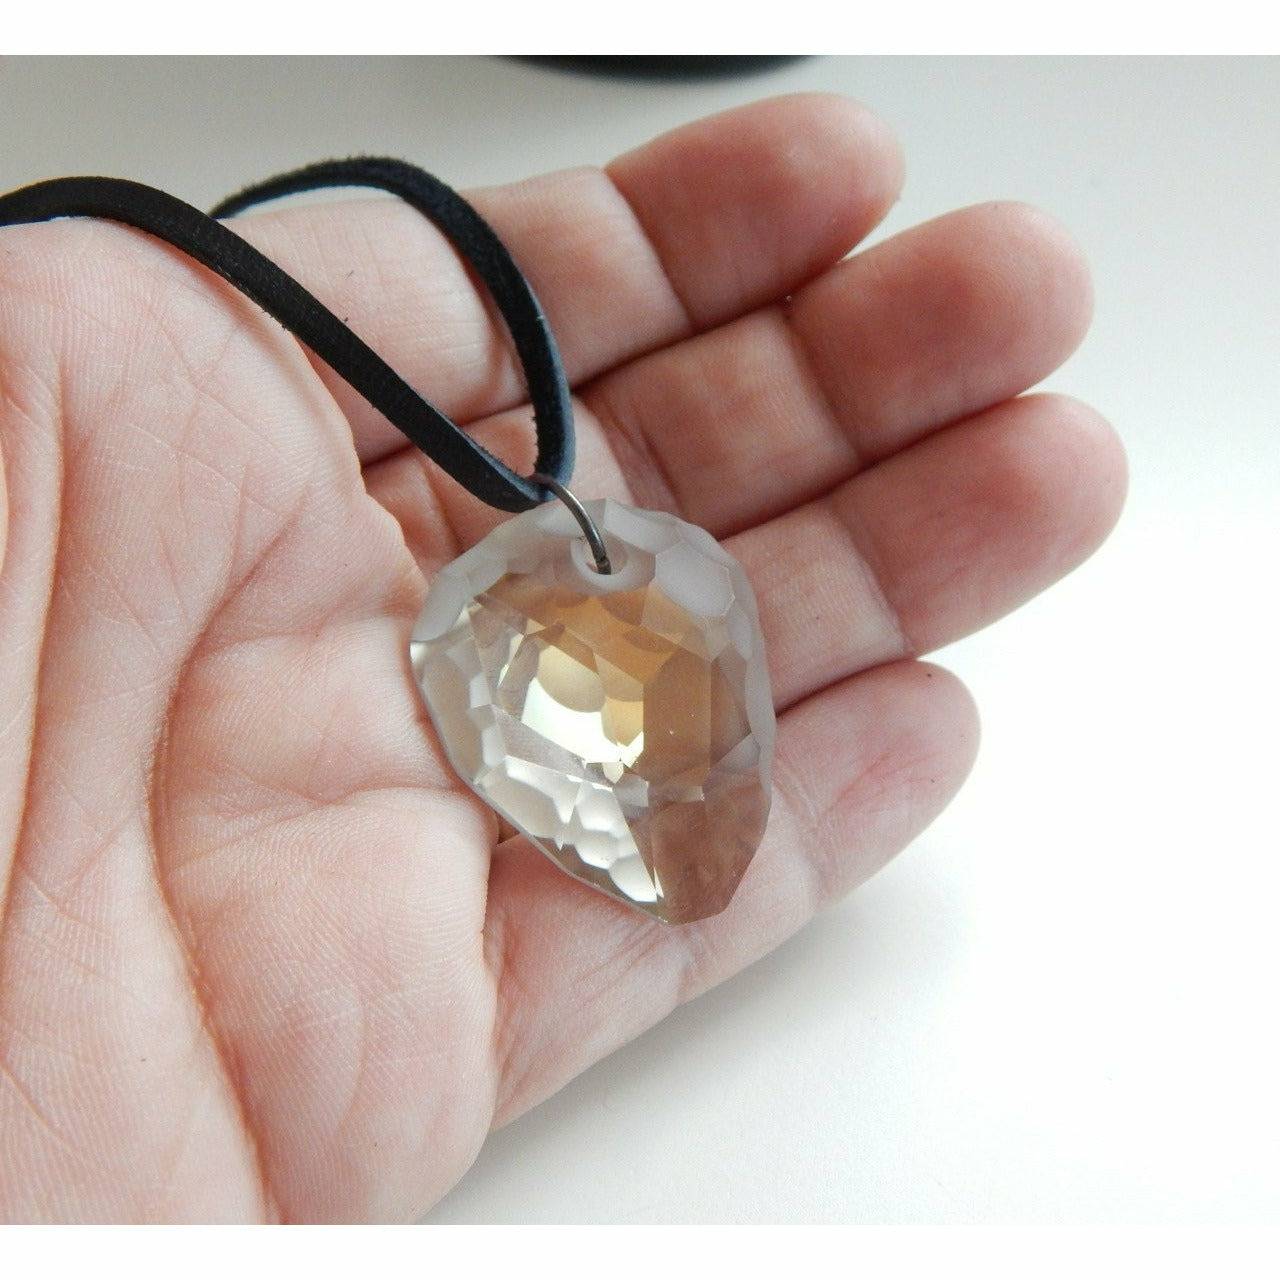 Rock crystal pendant on black leather necklace